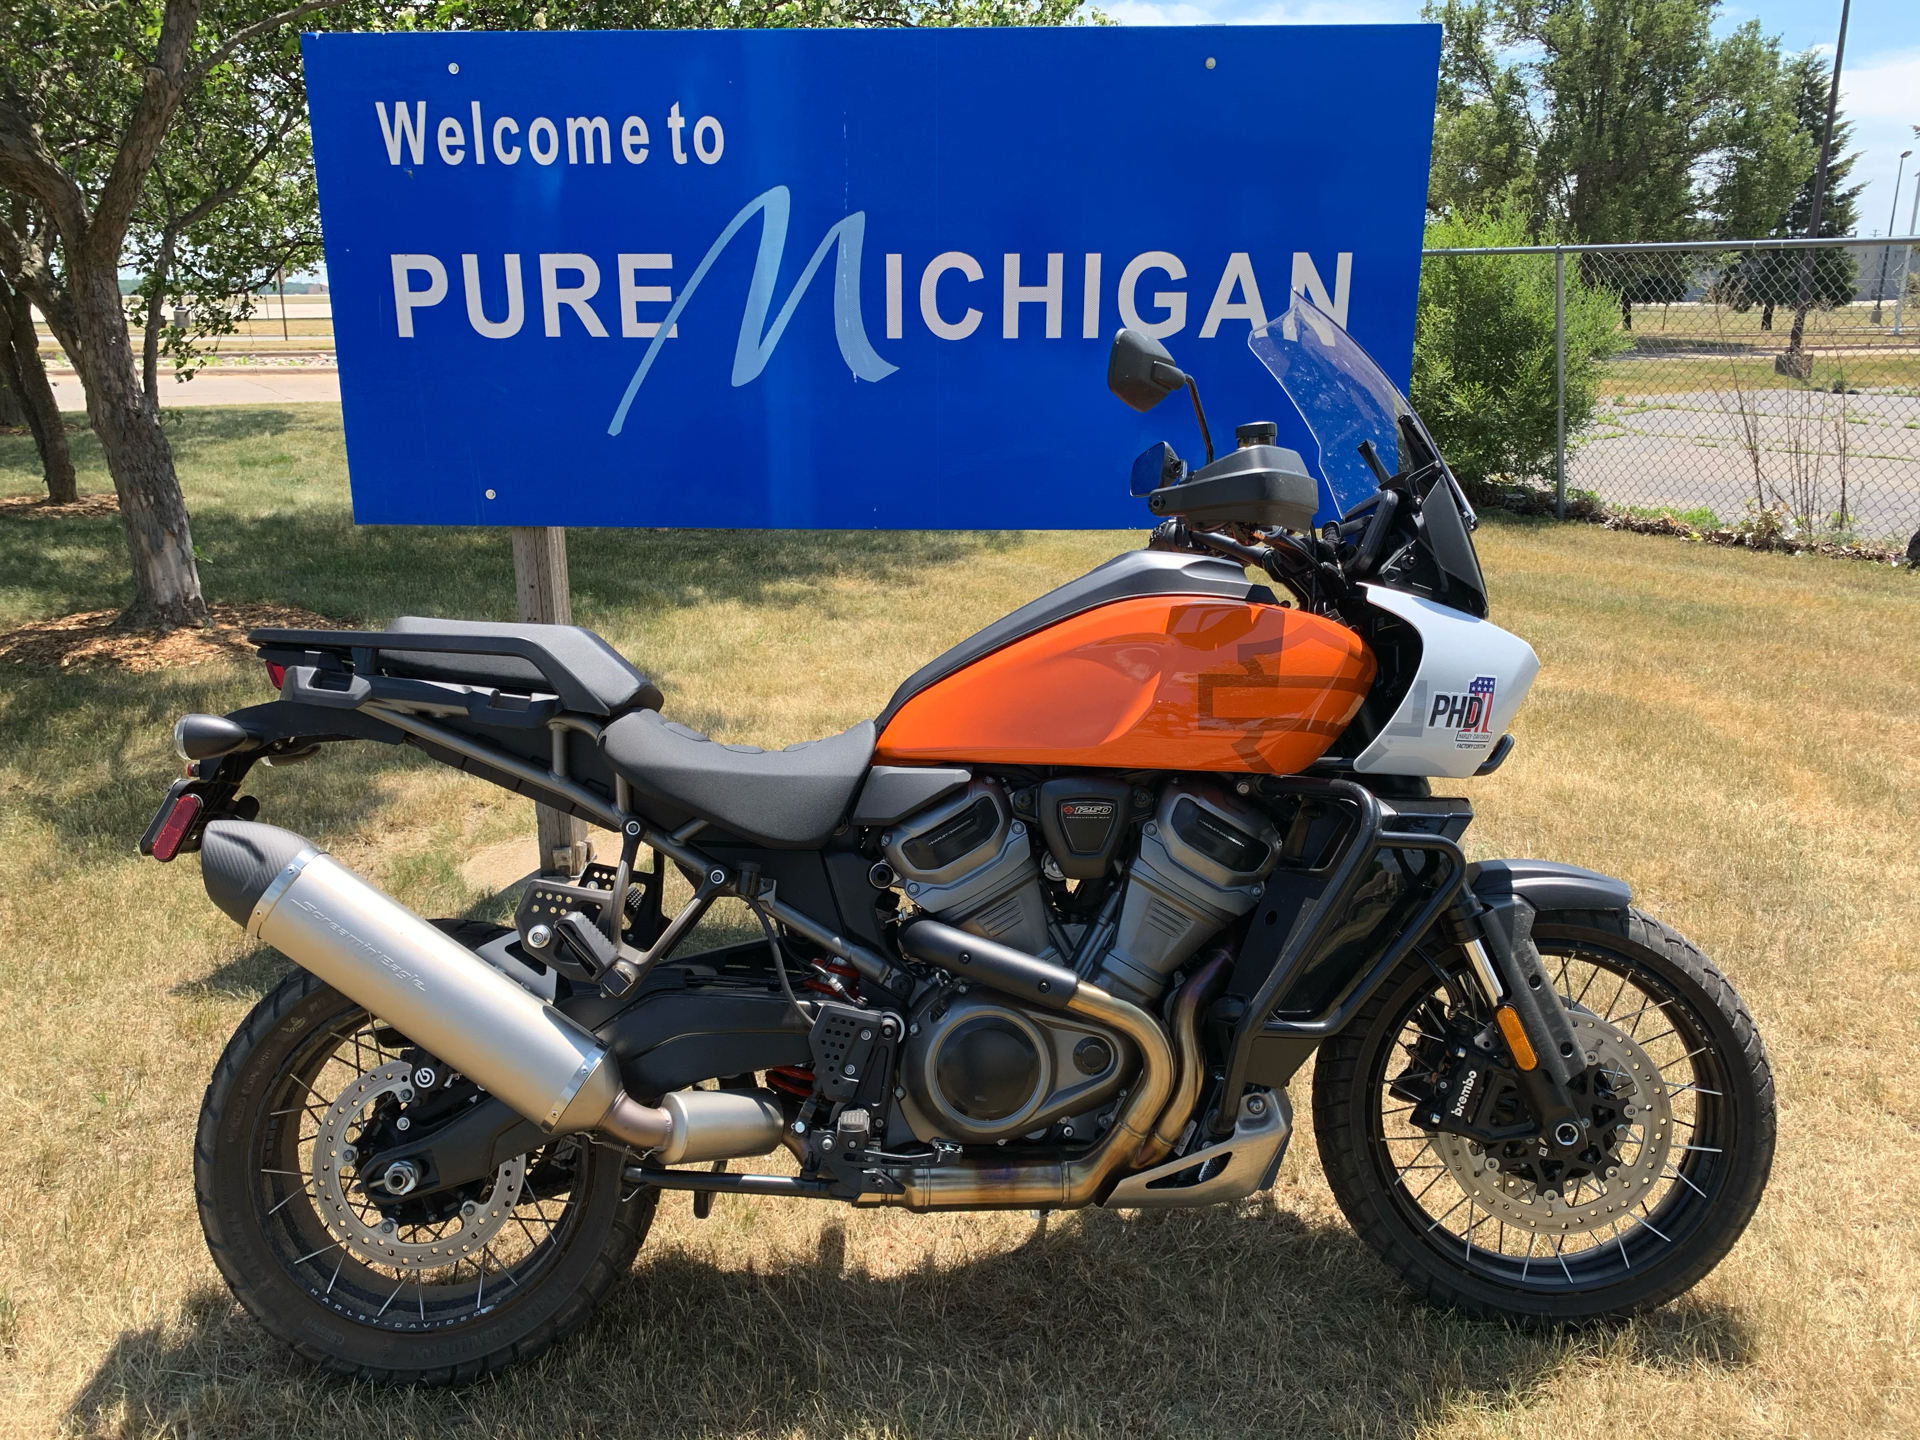 New 2021 Harley Davidson Pan America Special Motorcycles In Portage Mi 306862 Baja Orange Stone Washed White Pearl